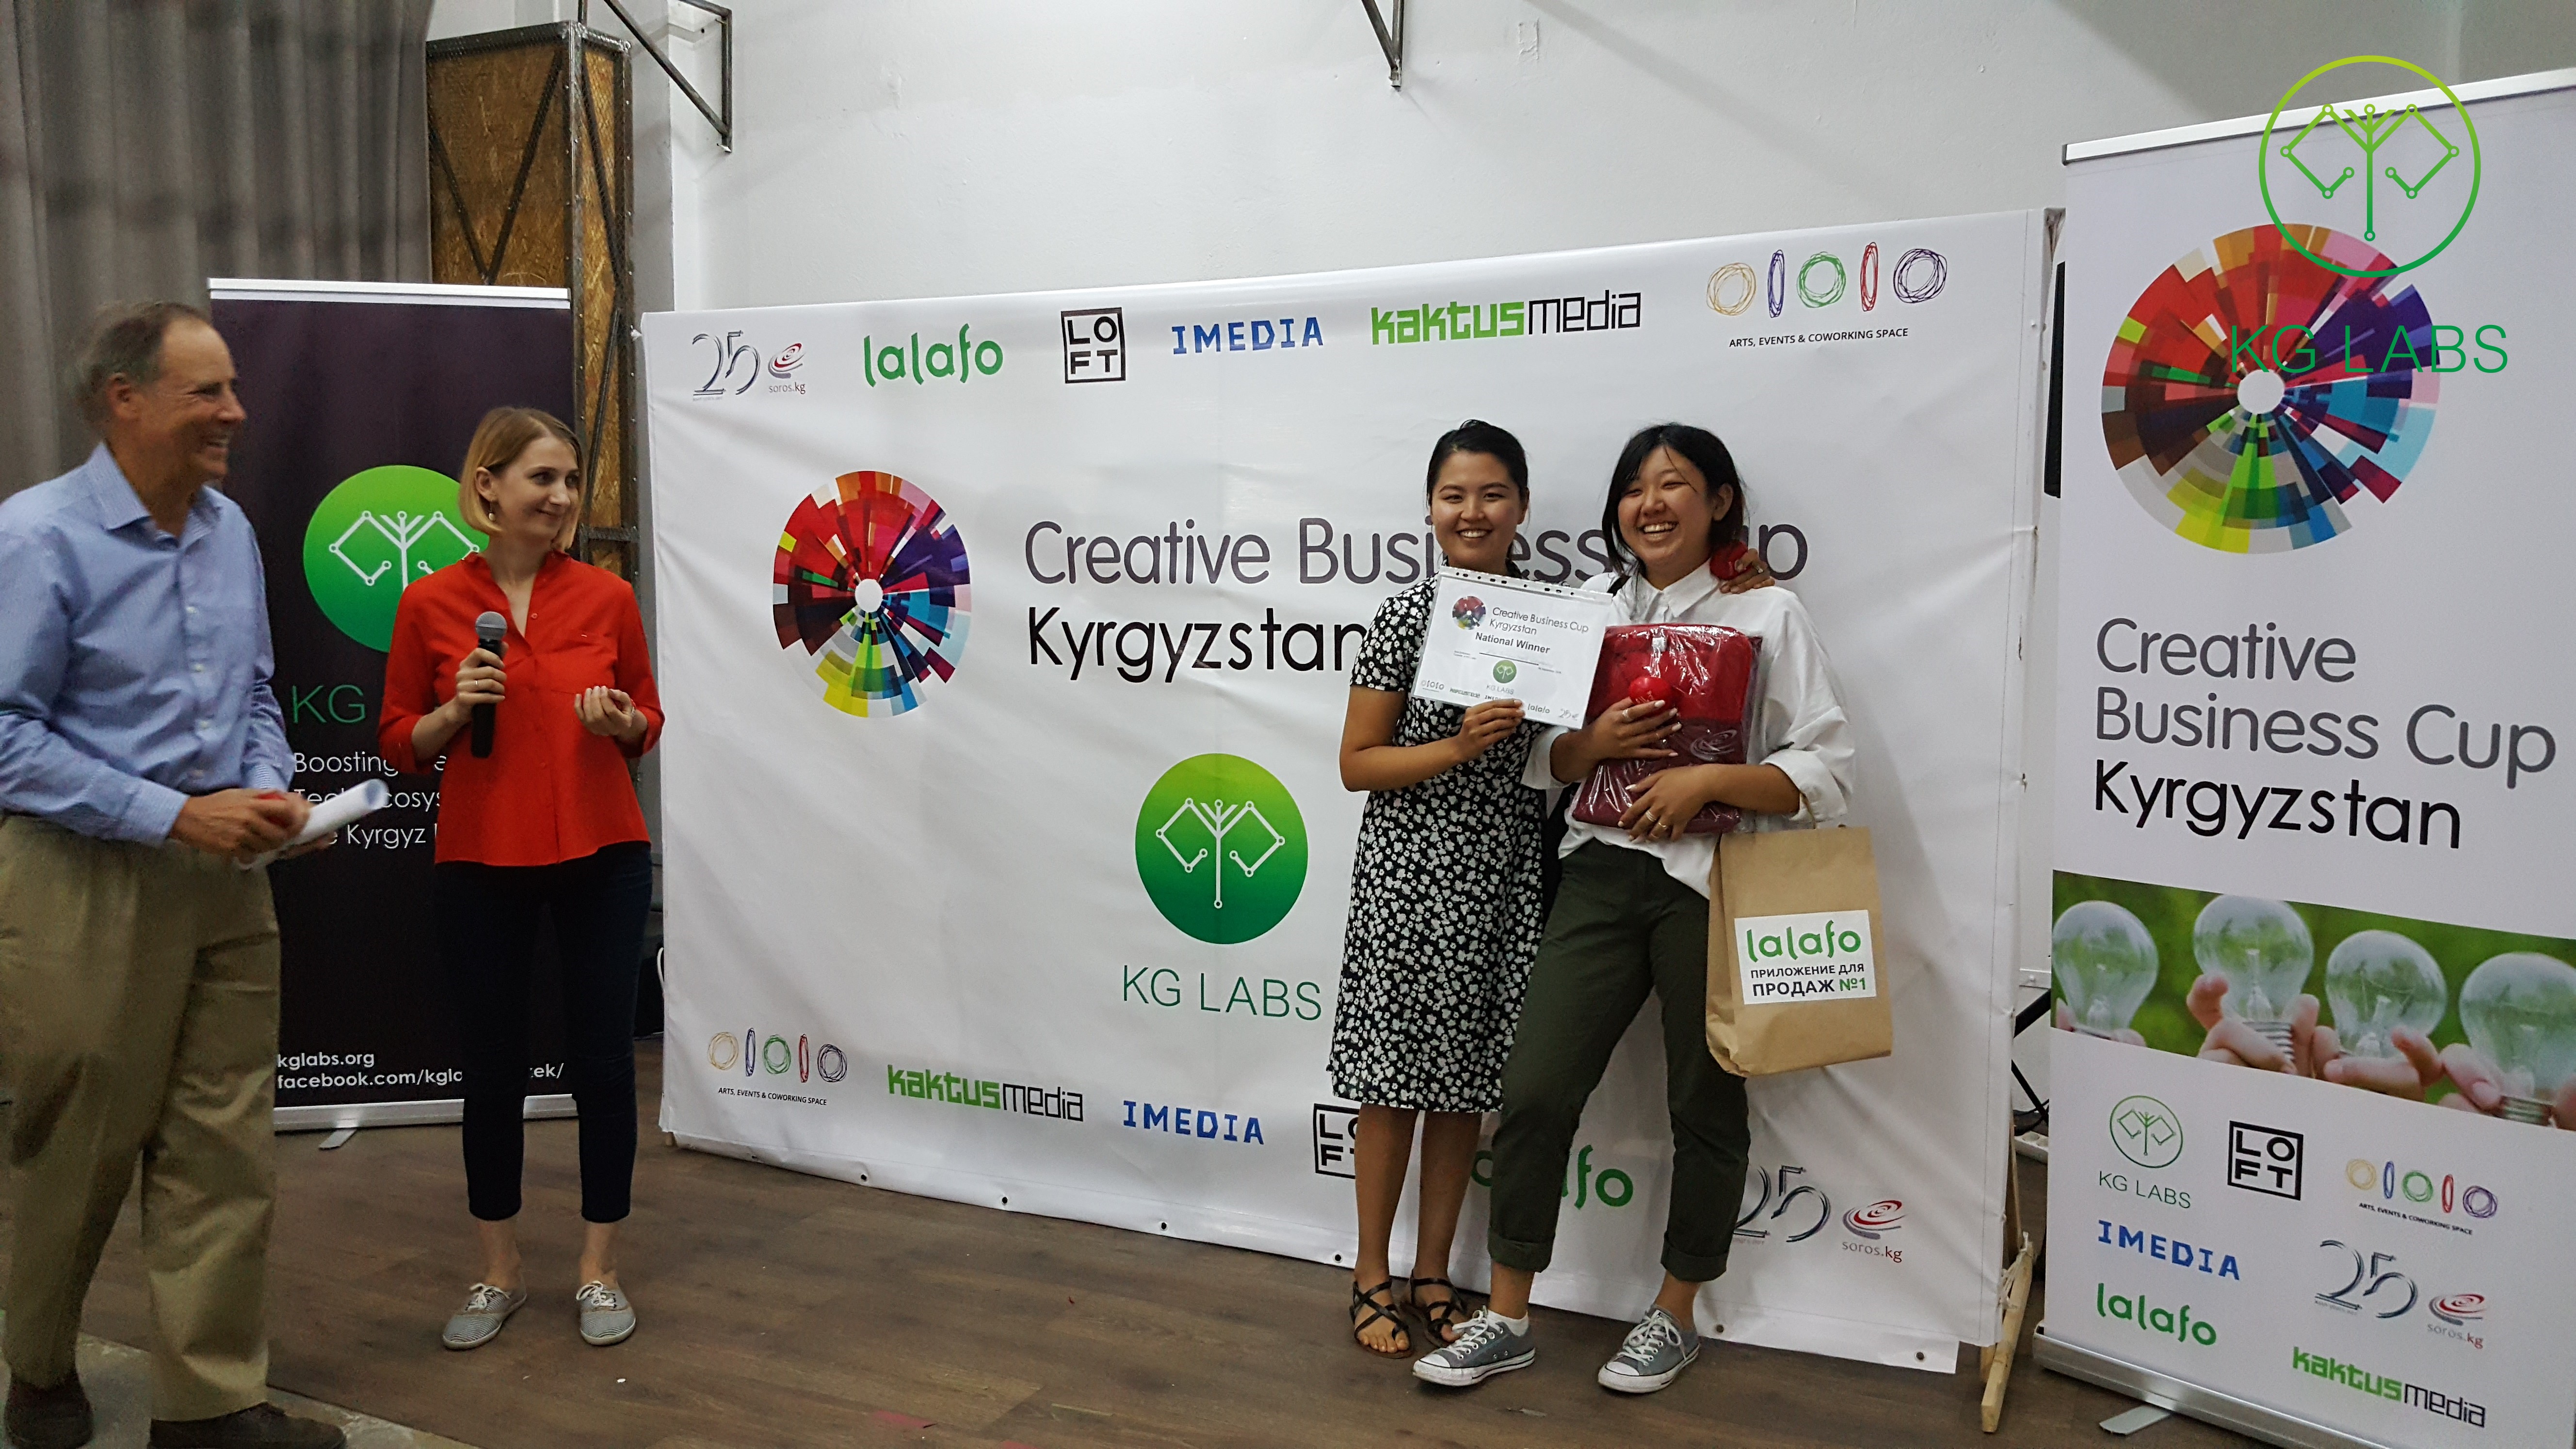 Creative Business Cup Kyrgyzstan